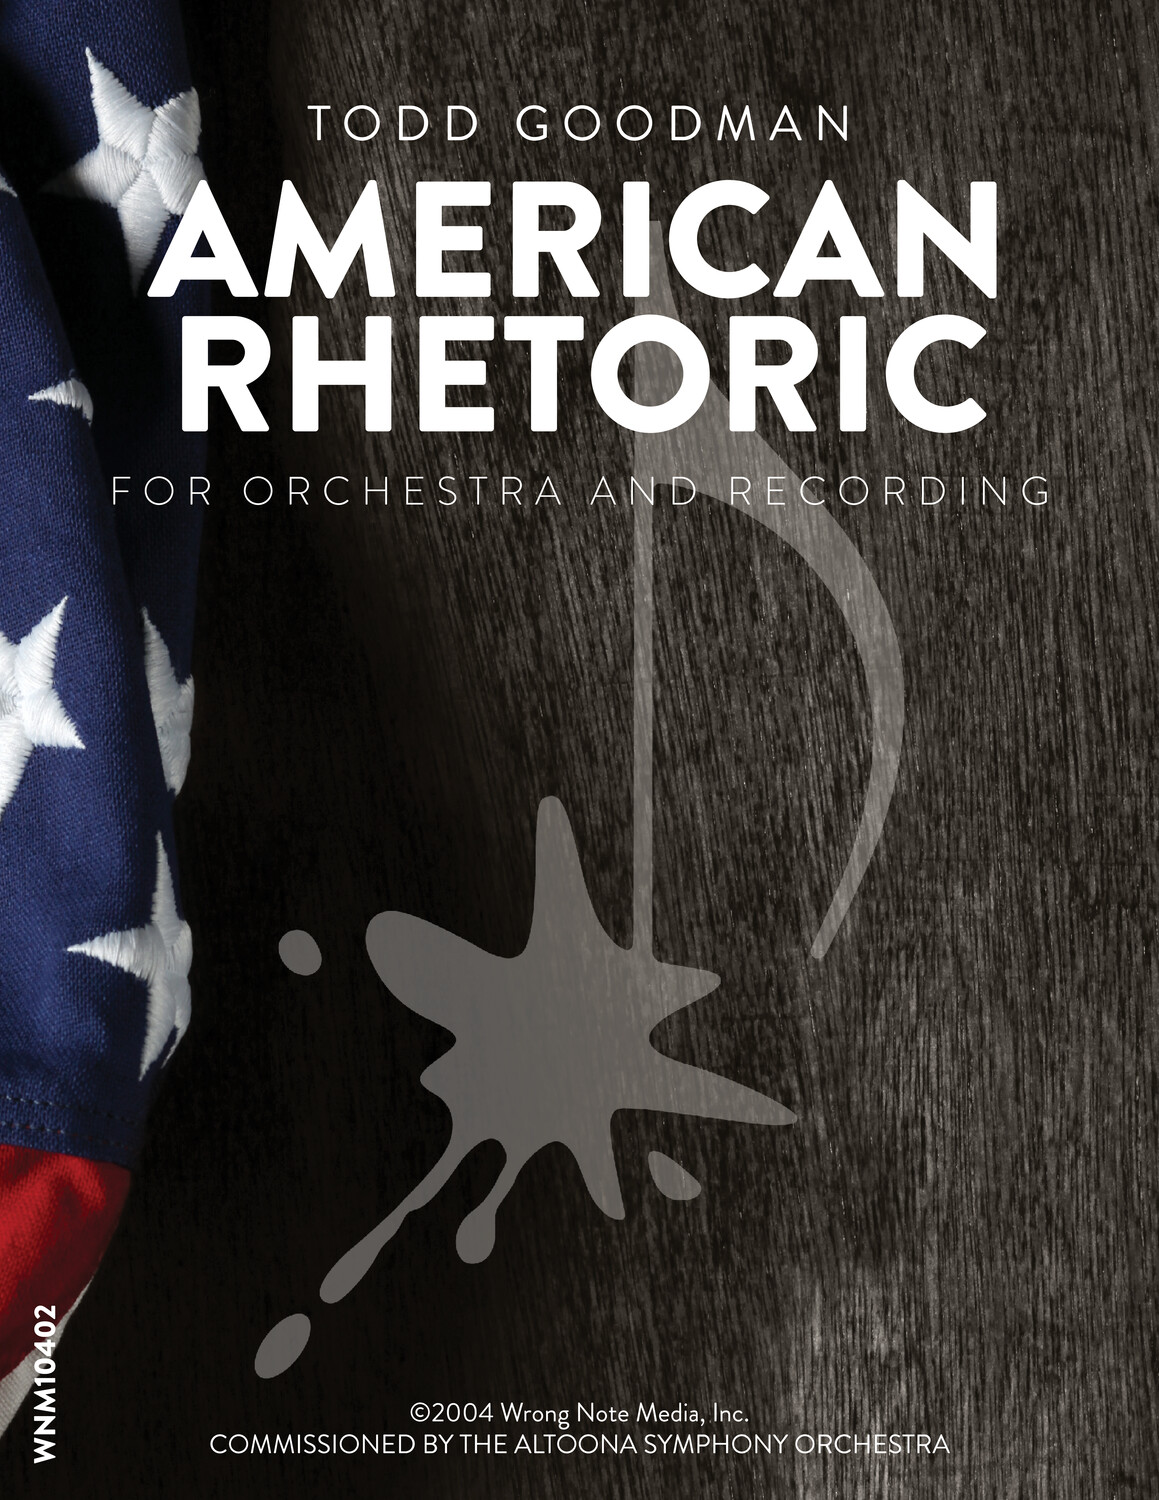 AMERICAN RHETORIC by Todd Goodman